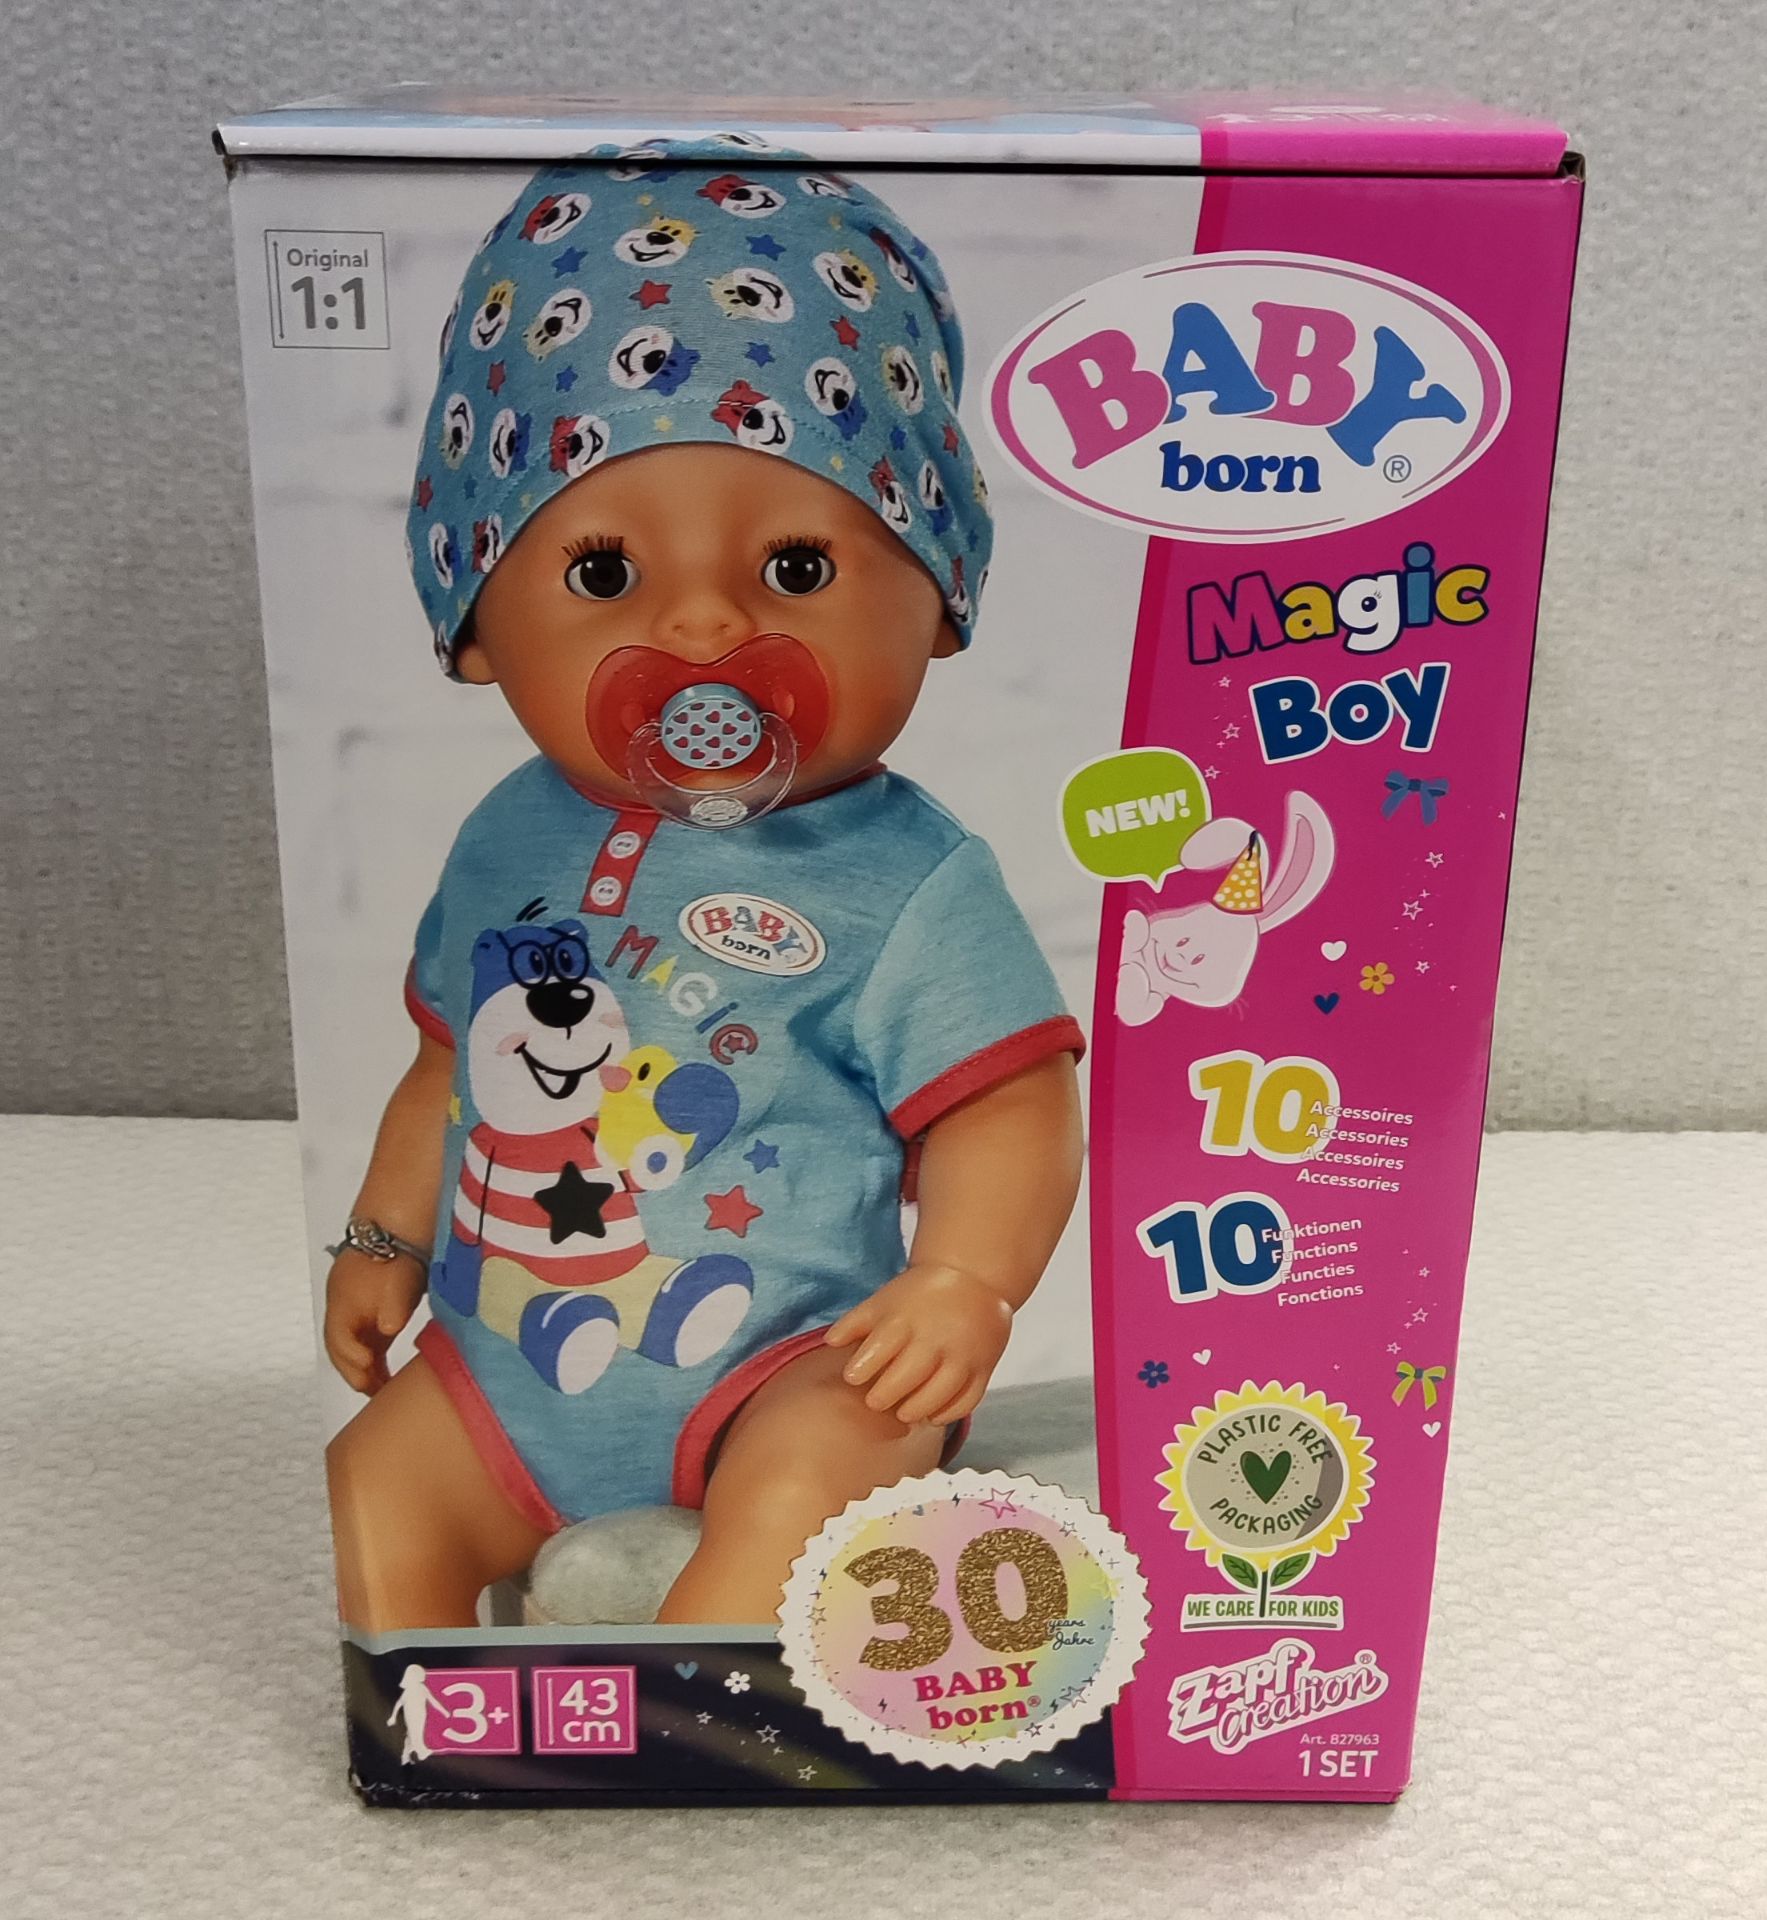 1 x Baby Born Magic Boy Doll - New/Boxed - Image 2 of 6